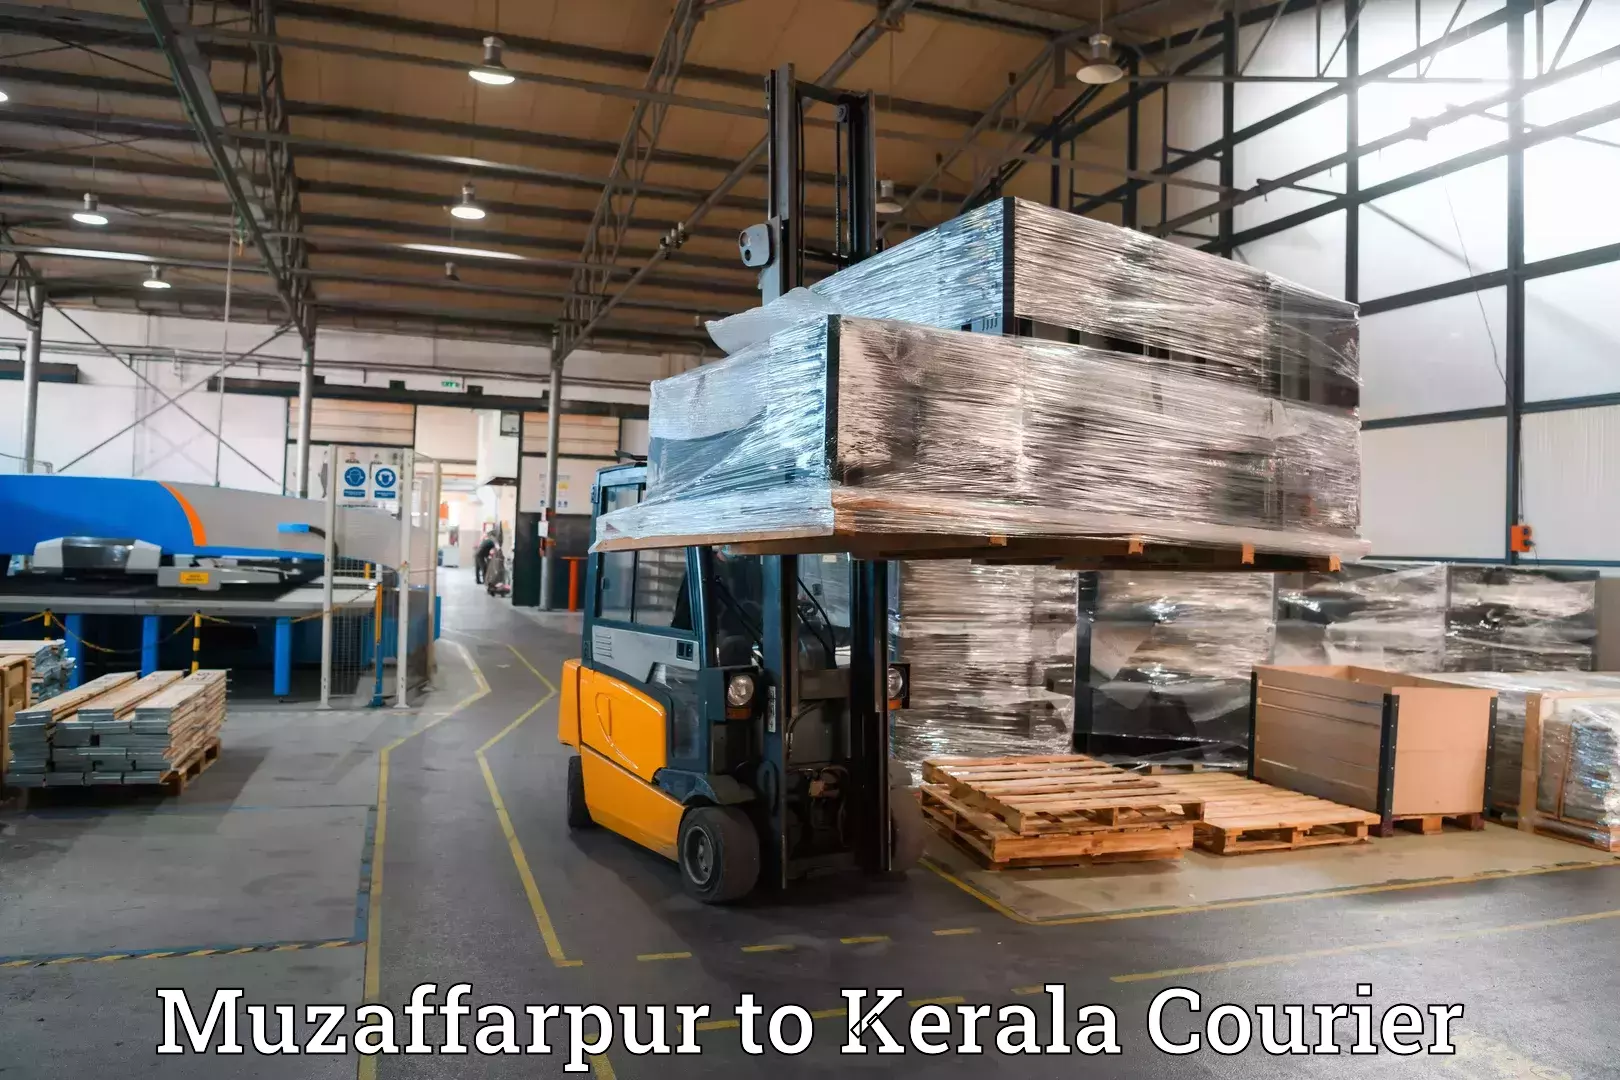 Luggage delivery network Muzaffarpur to Kerala